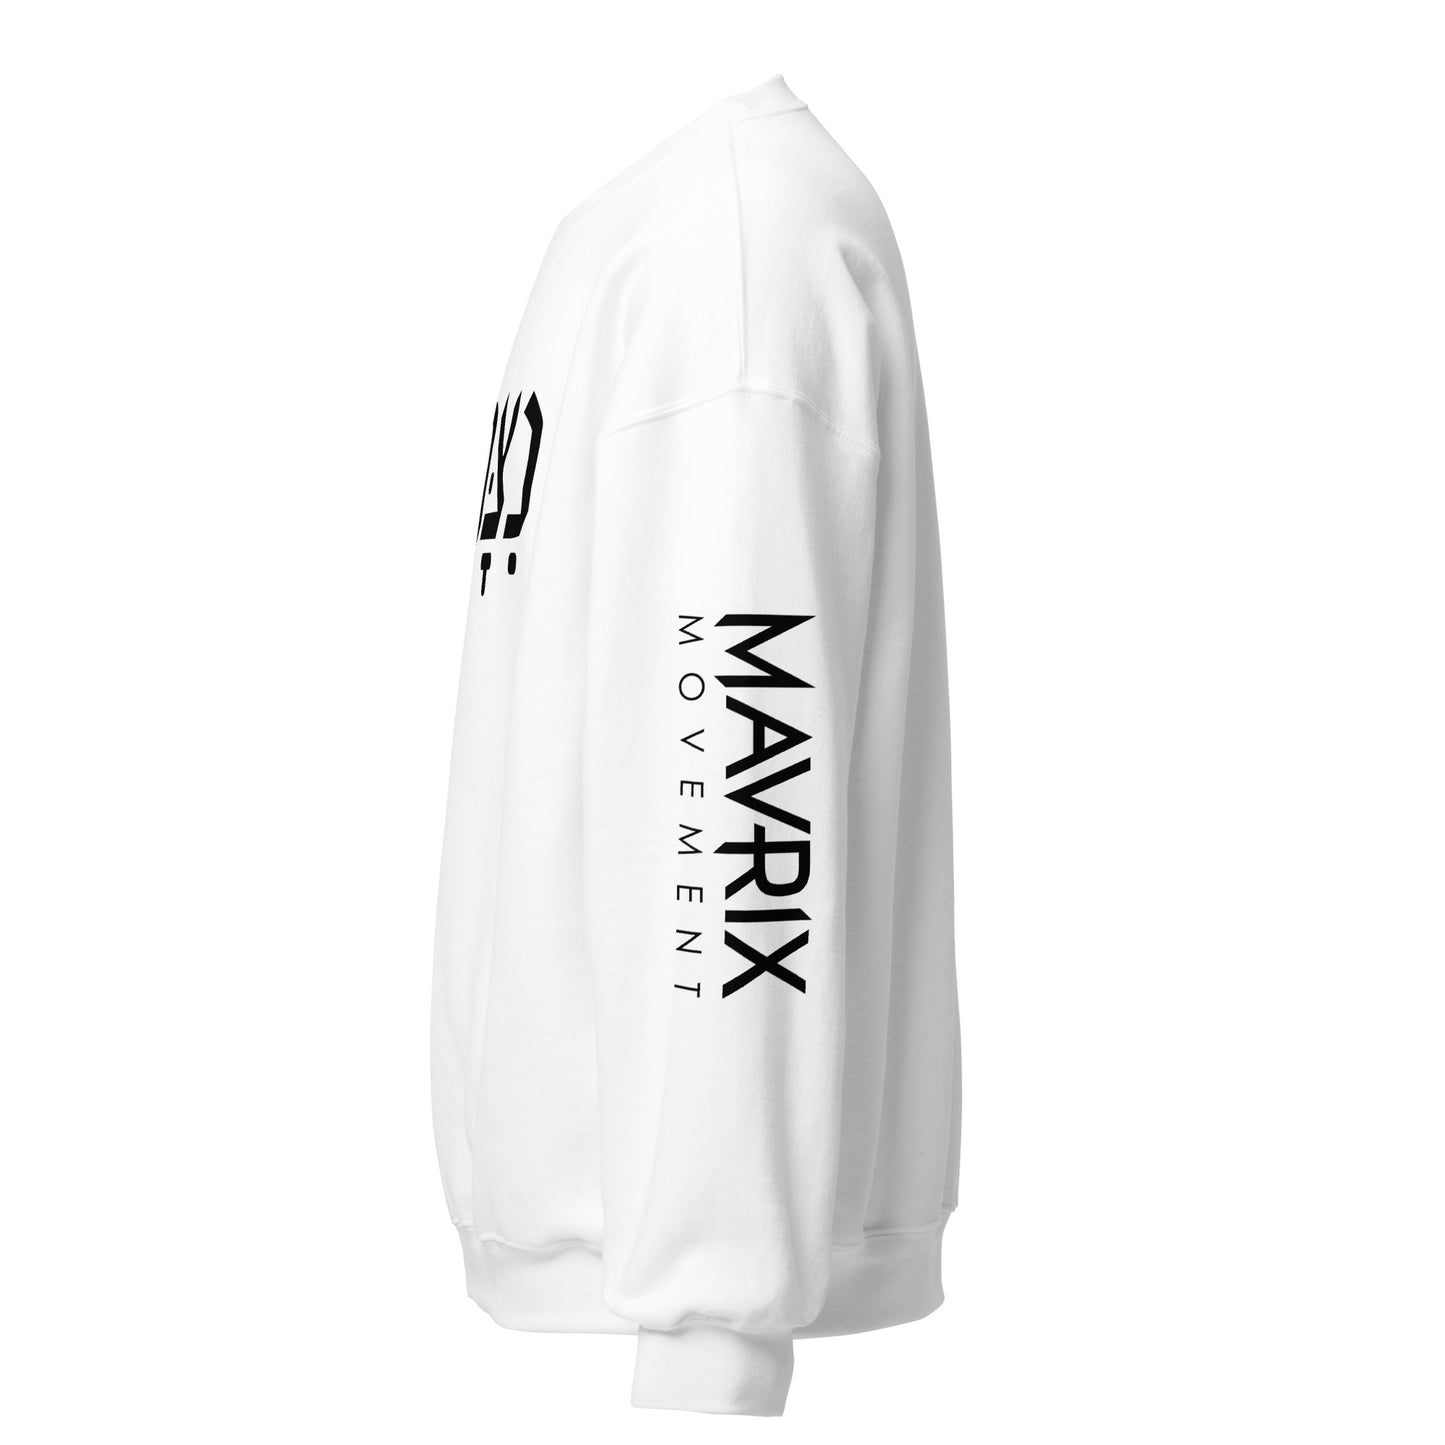 Mavrix Victory (Hebrew) Sweatshirt (6 colors)